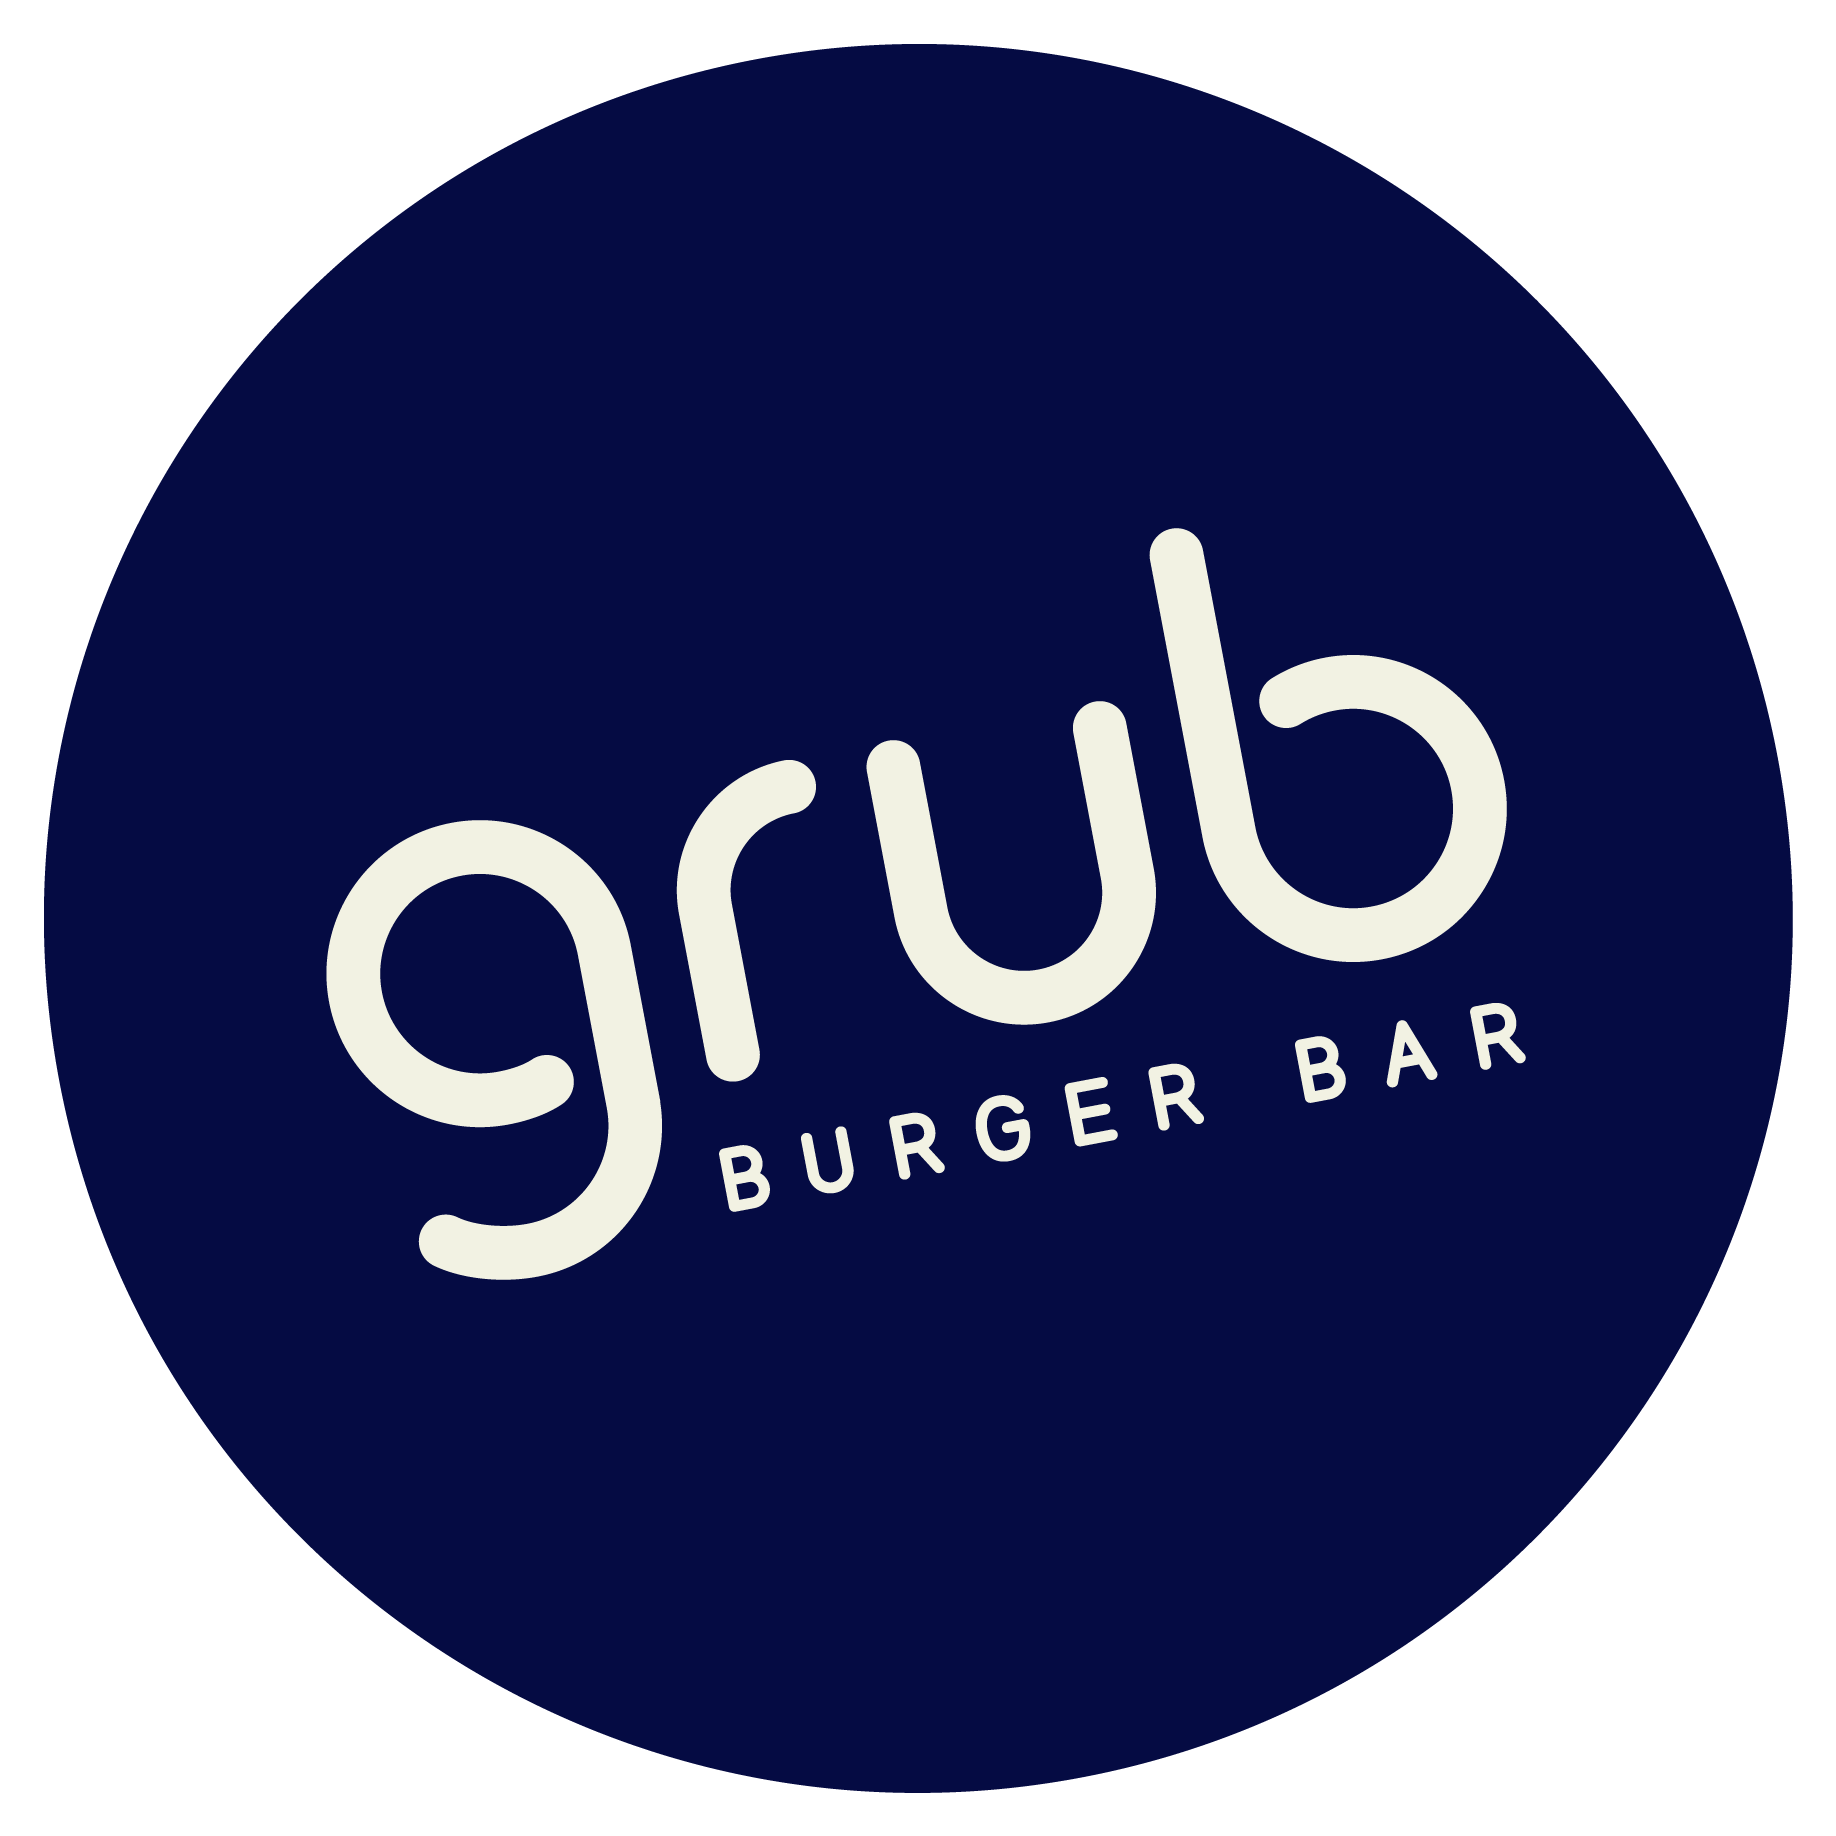 All Burger Places Logo - Grub Burger Bar - Burgers, Shakes, Cocktails, and Life